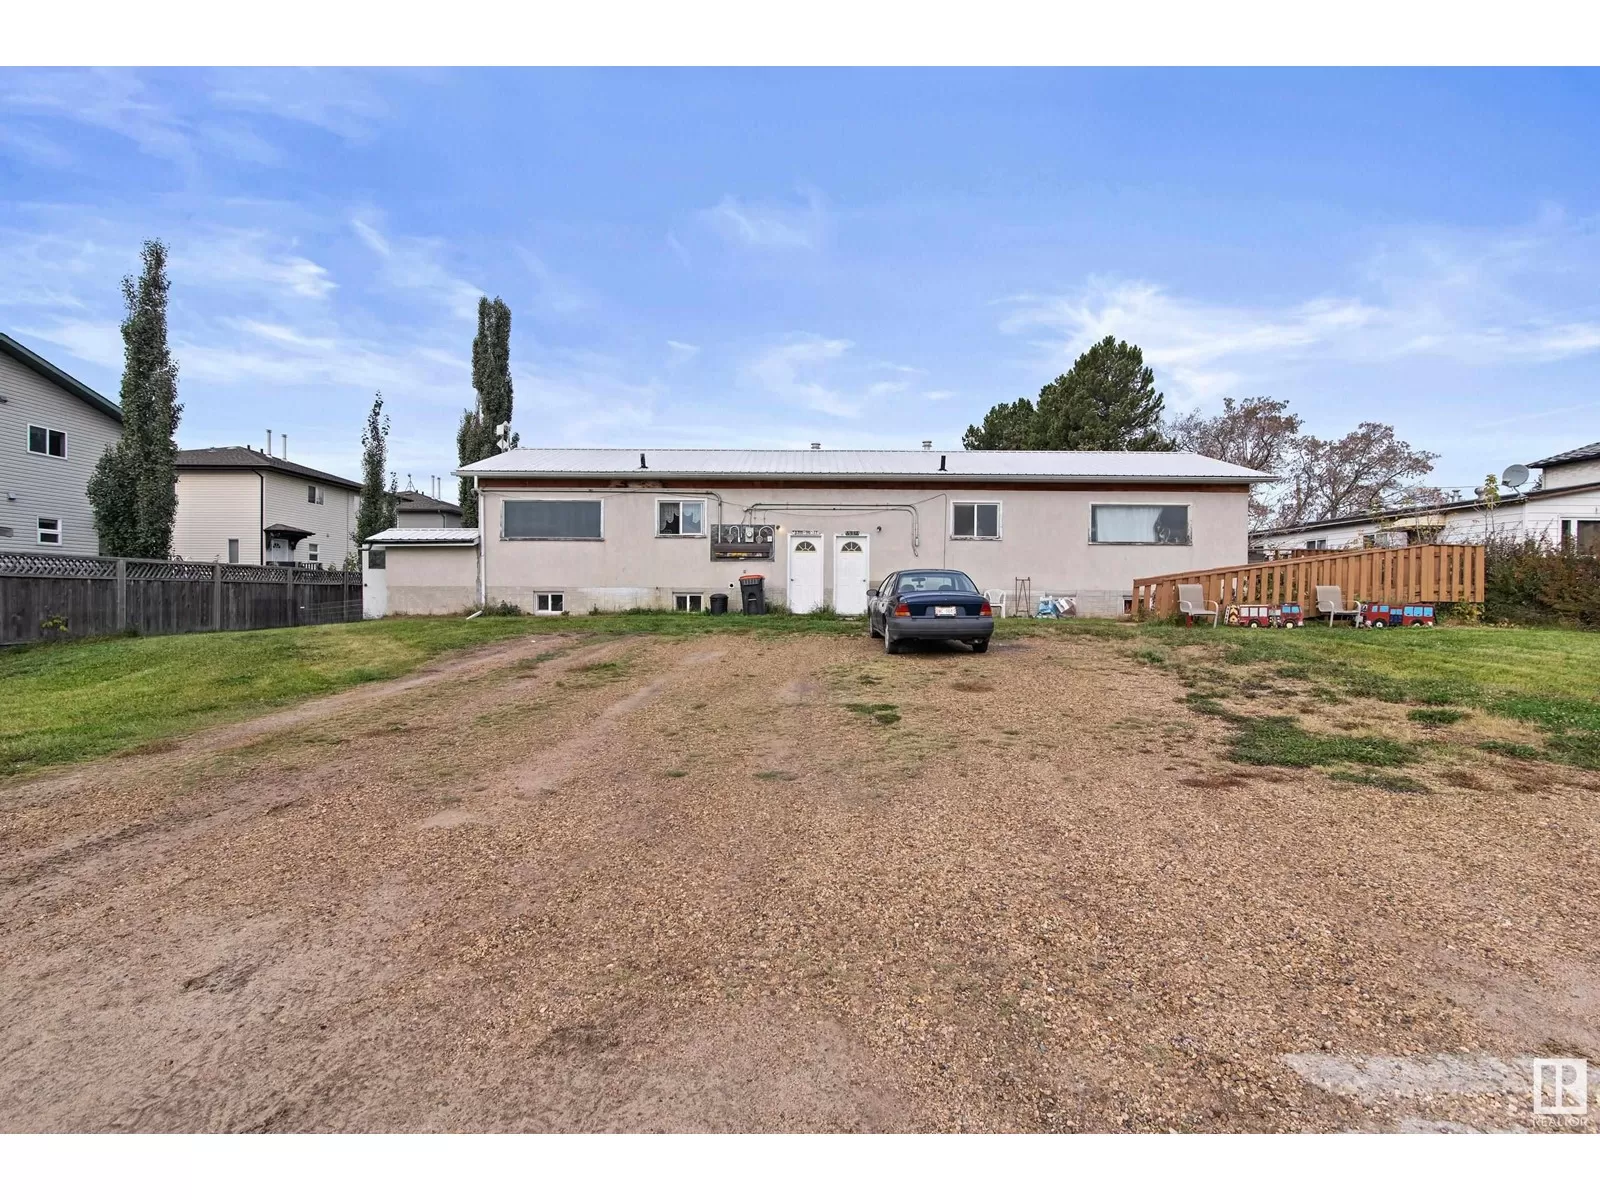 Duplex for rent: 5310 & 5312 50 St, Thorsby, Alberta T0C 2P0